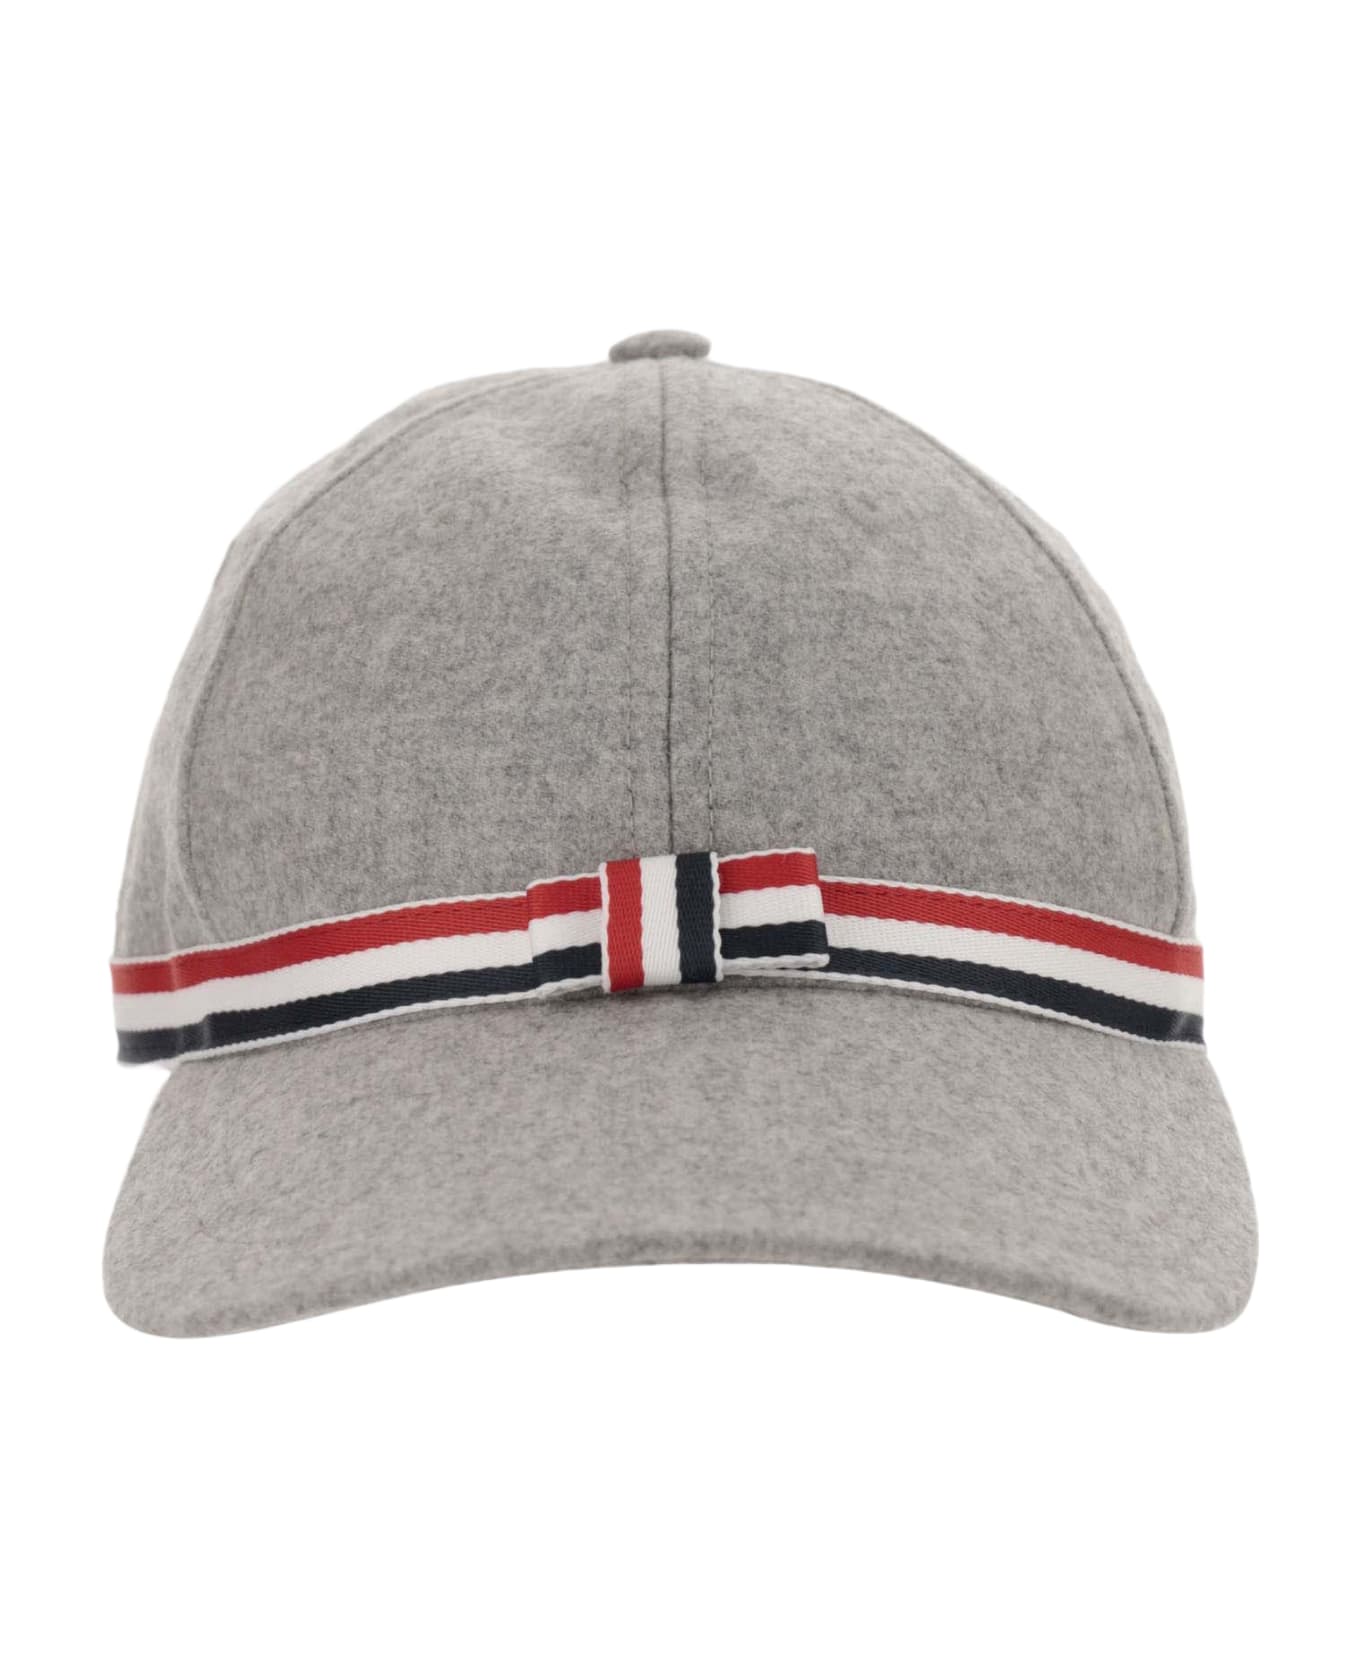 Thom Browne Wool Baseball Hat - Grey